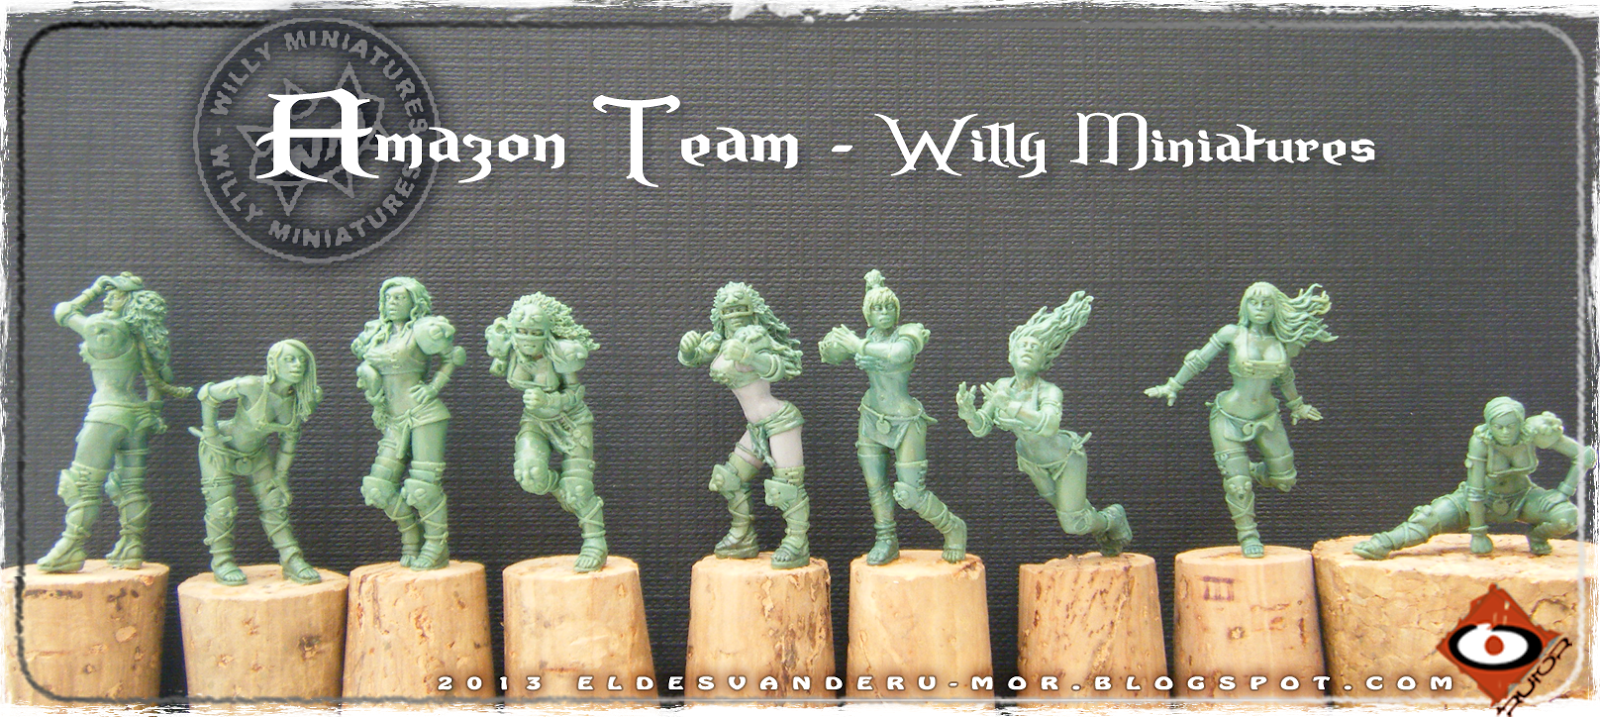 Foto de varias miniaturas del Equipo Blood Bowl de Amazonas de WILLY Miniatures hechas por ªRU-MOR. Catcher, Blitzers, thrower and linewoman, fantasy football